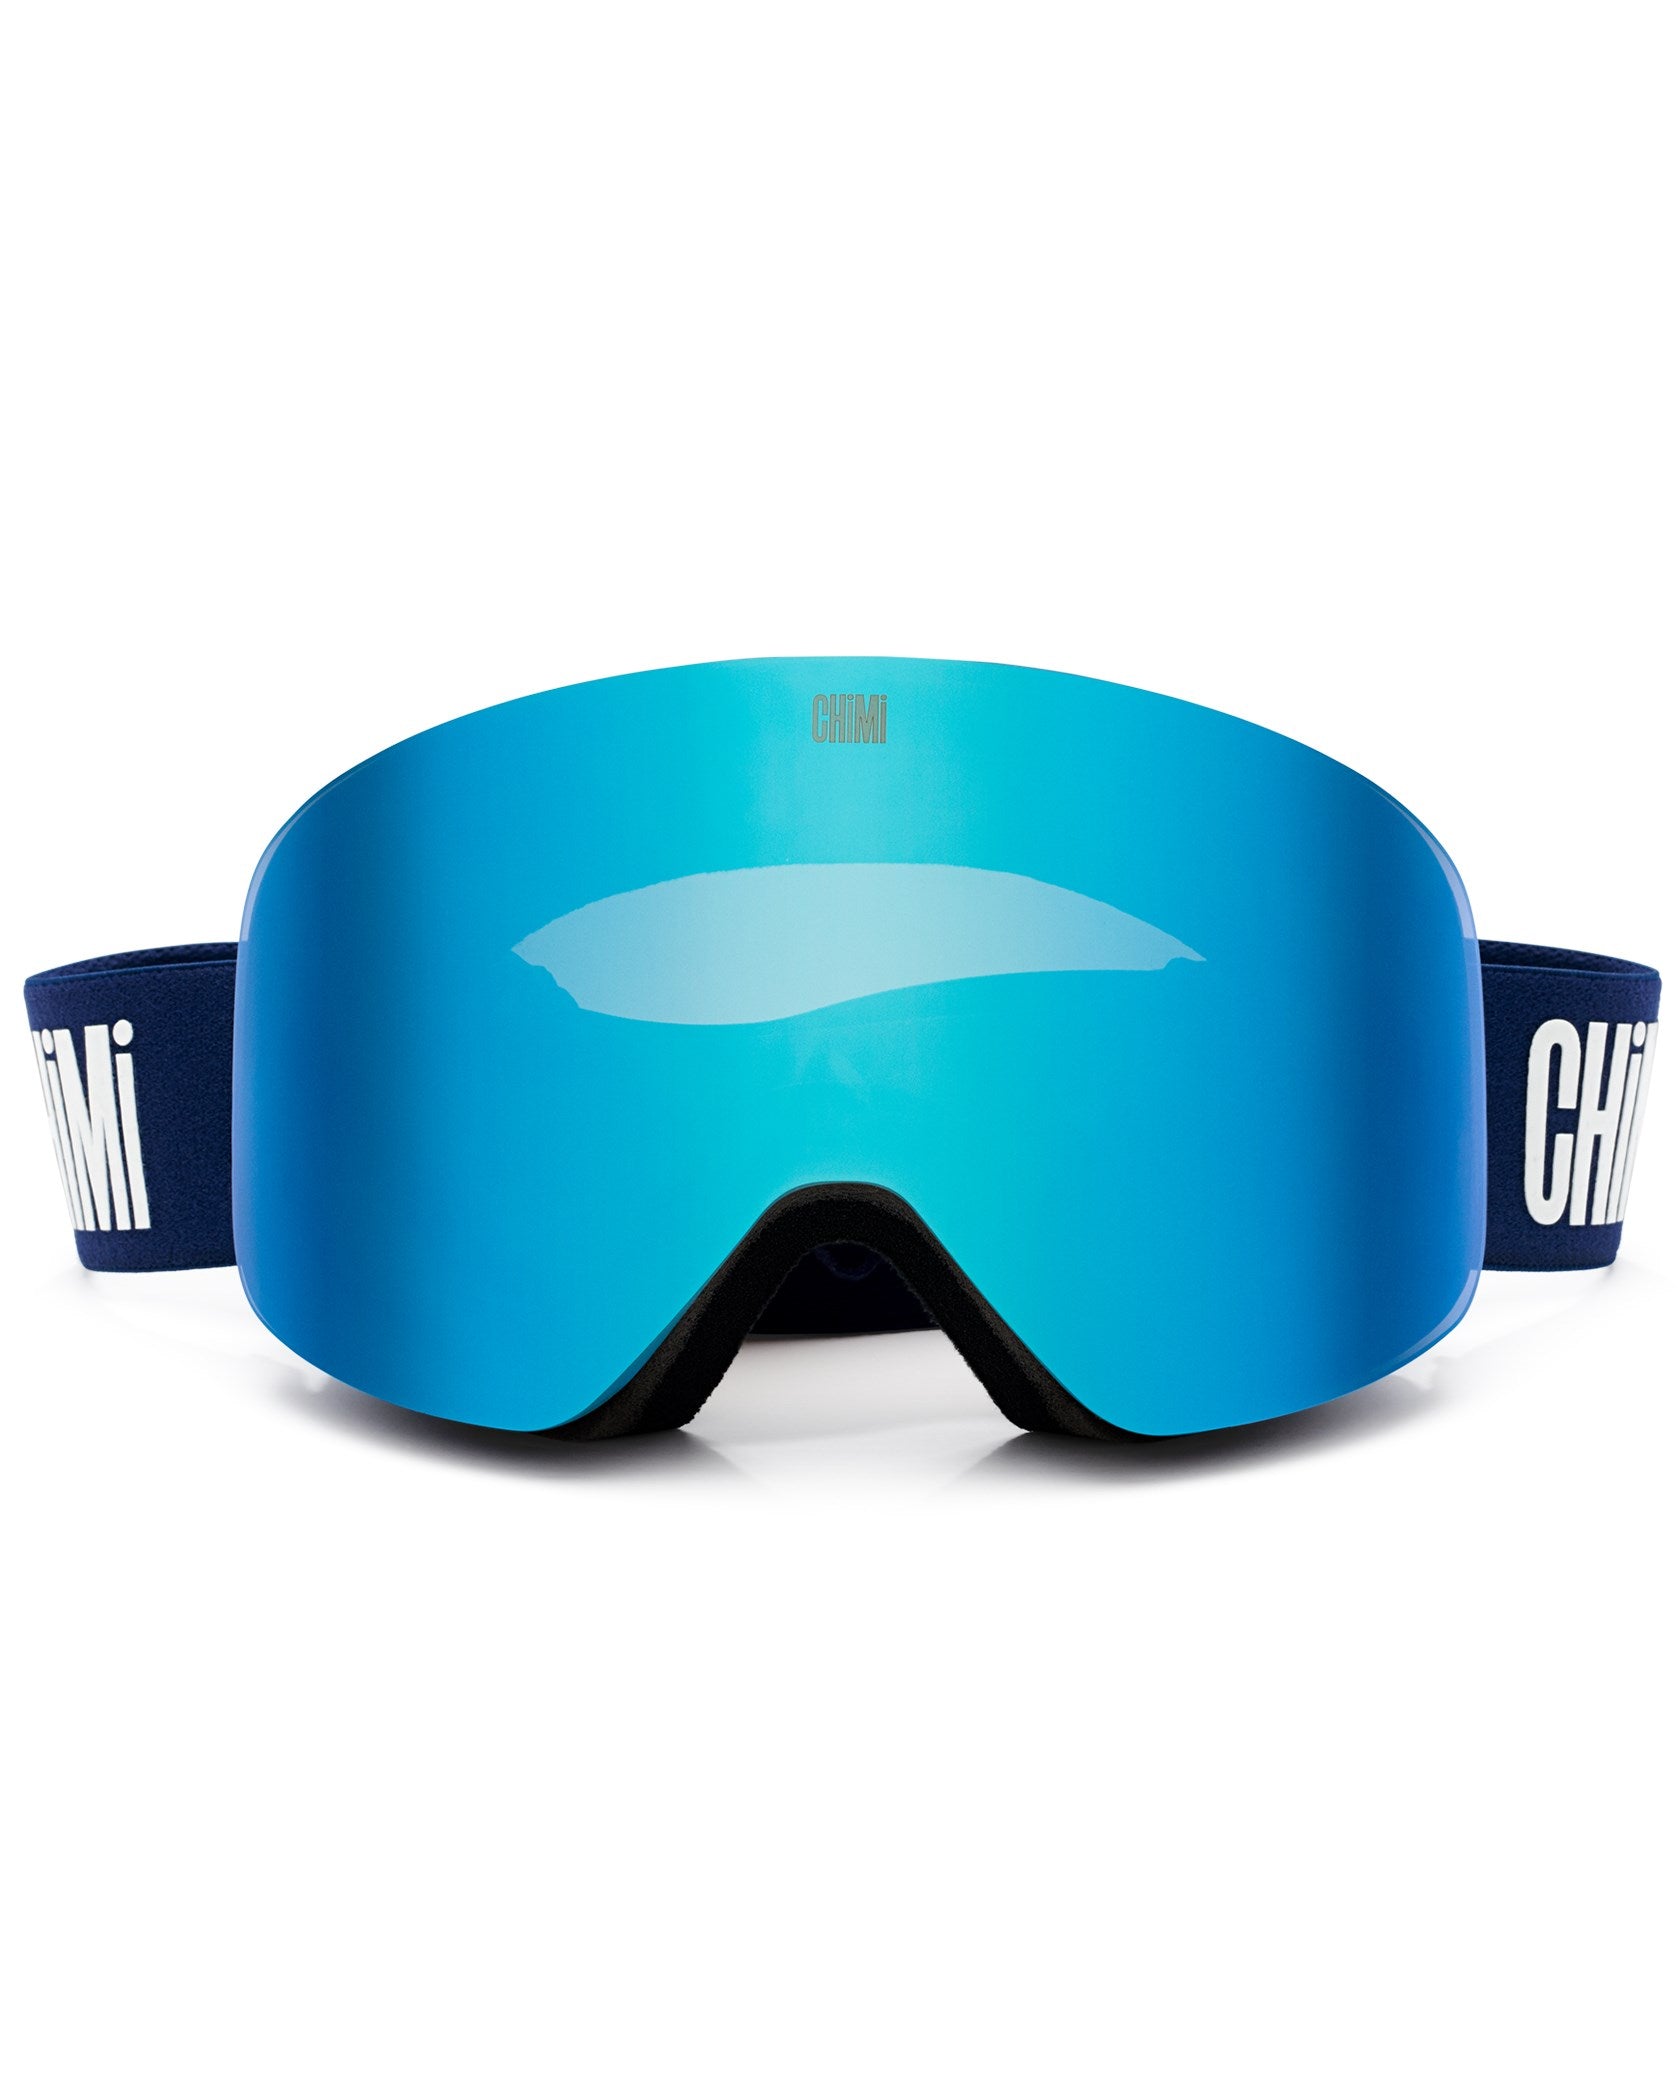 Chimi | Ski Goggles / Acai